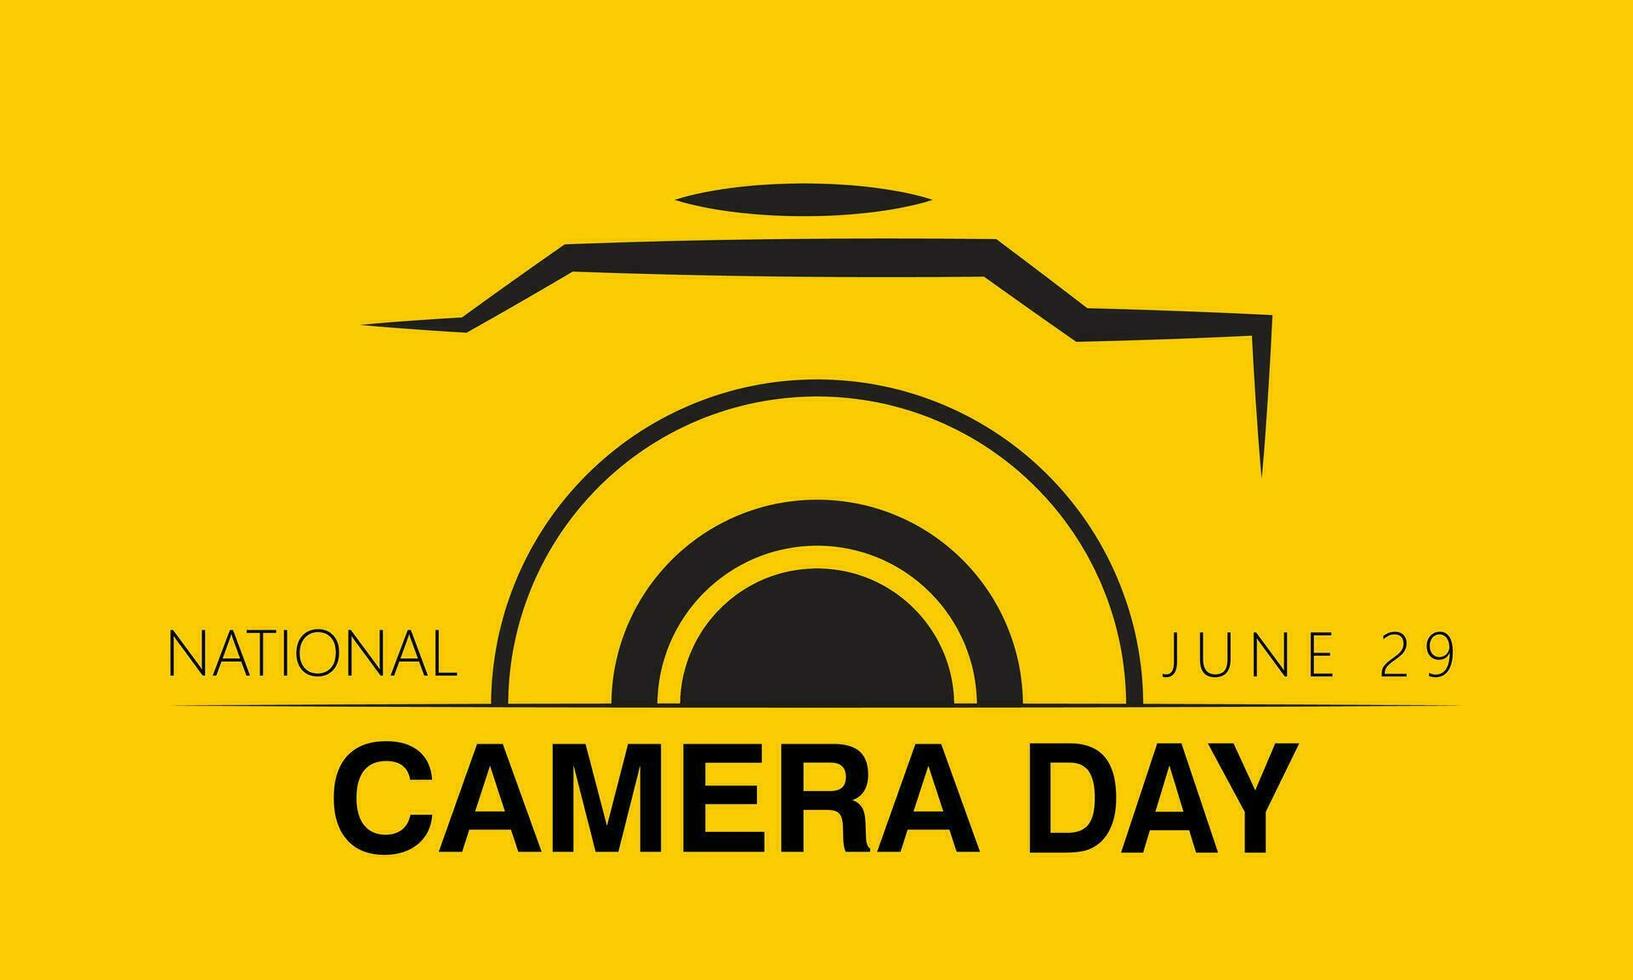 national camera day good for national camera day celebration. Vector illustration